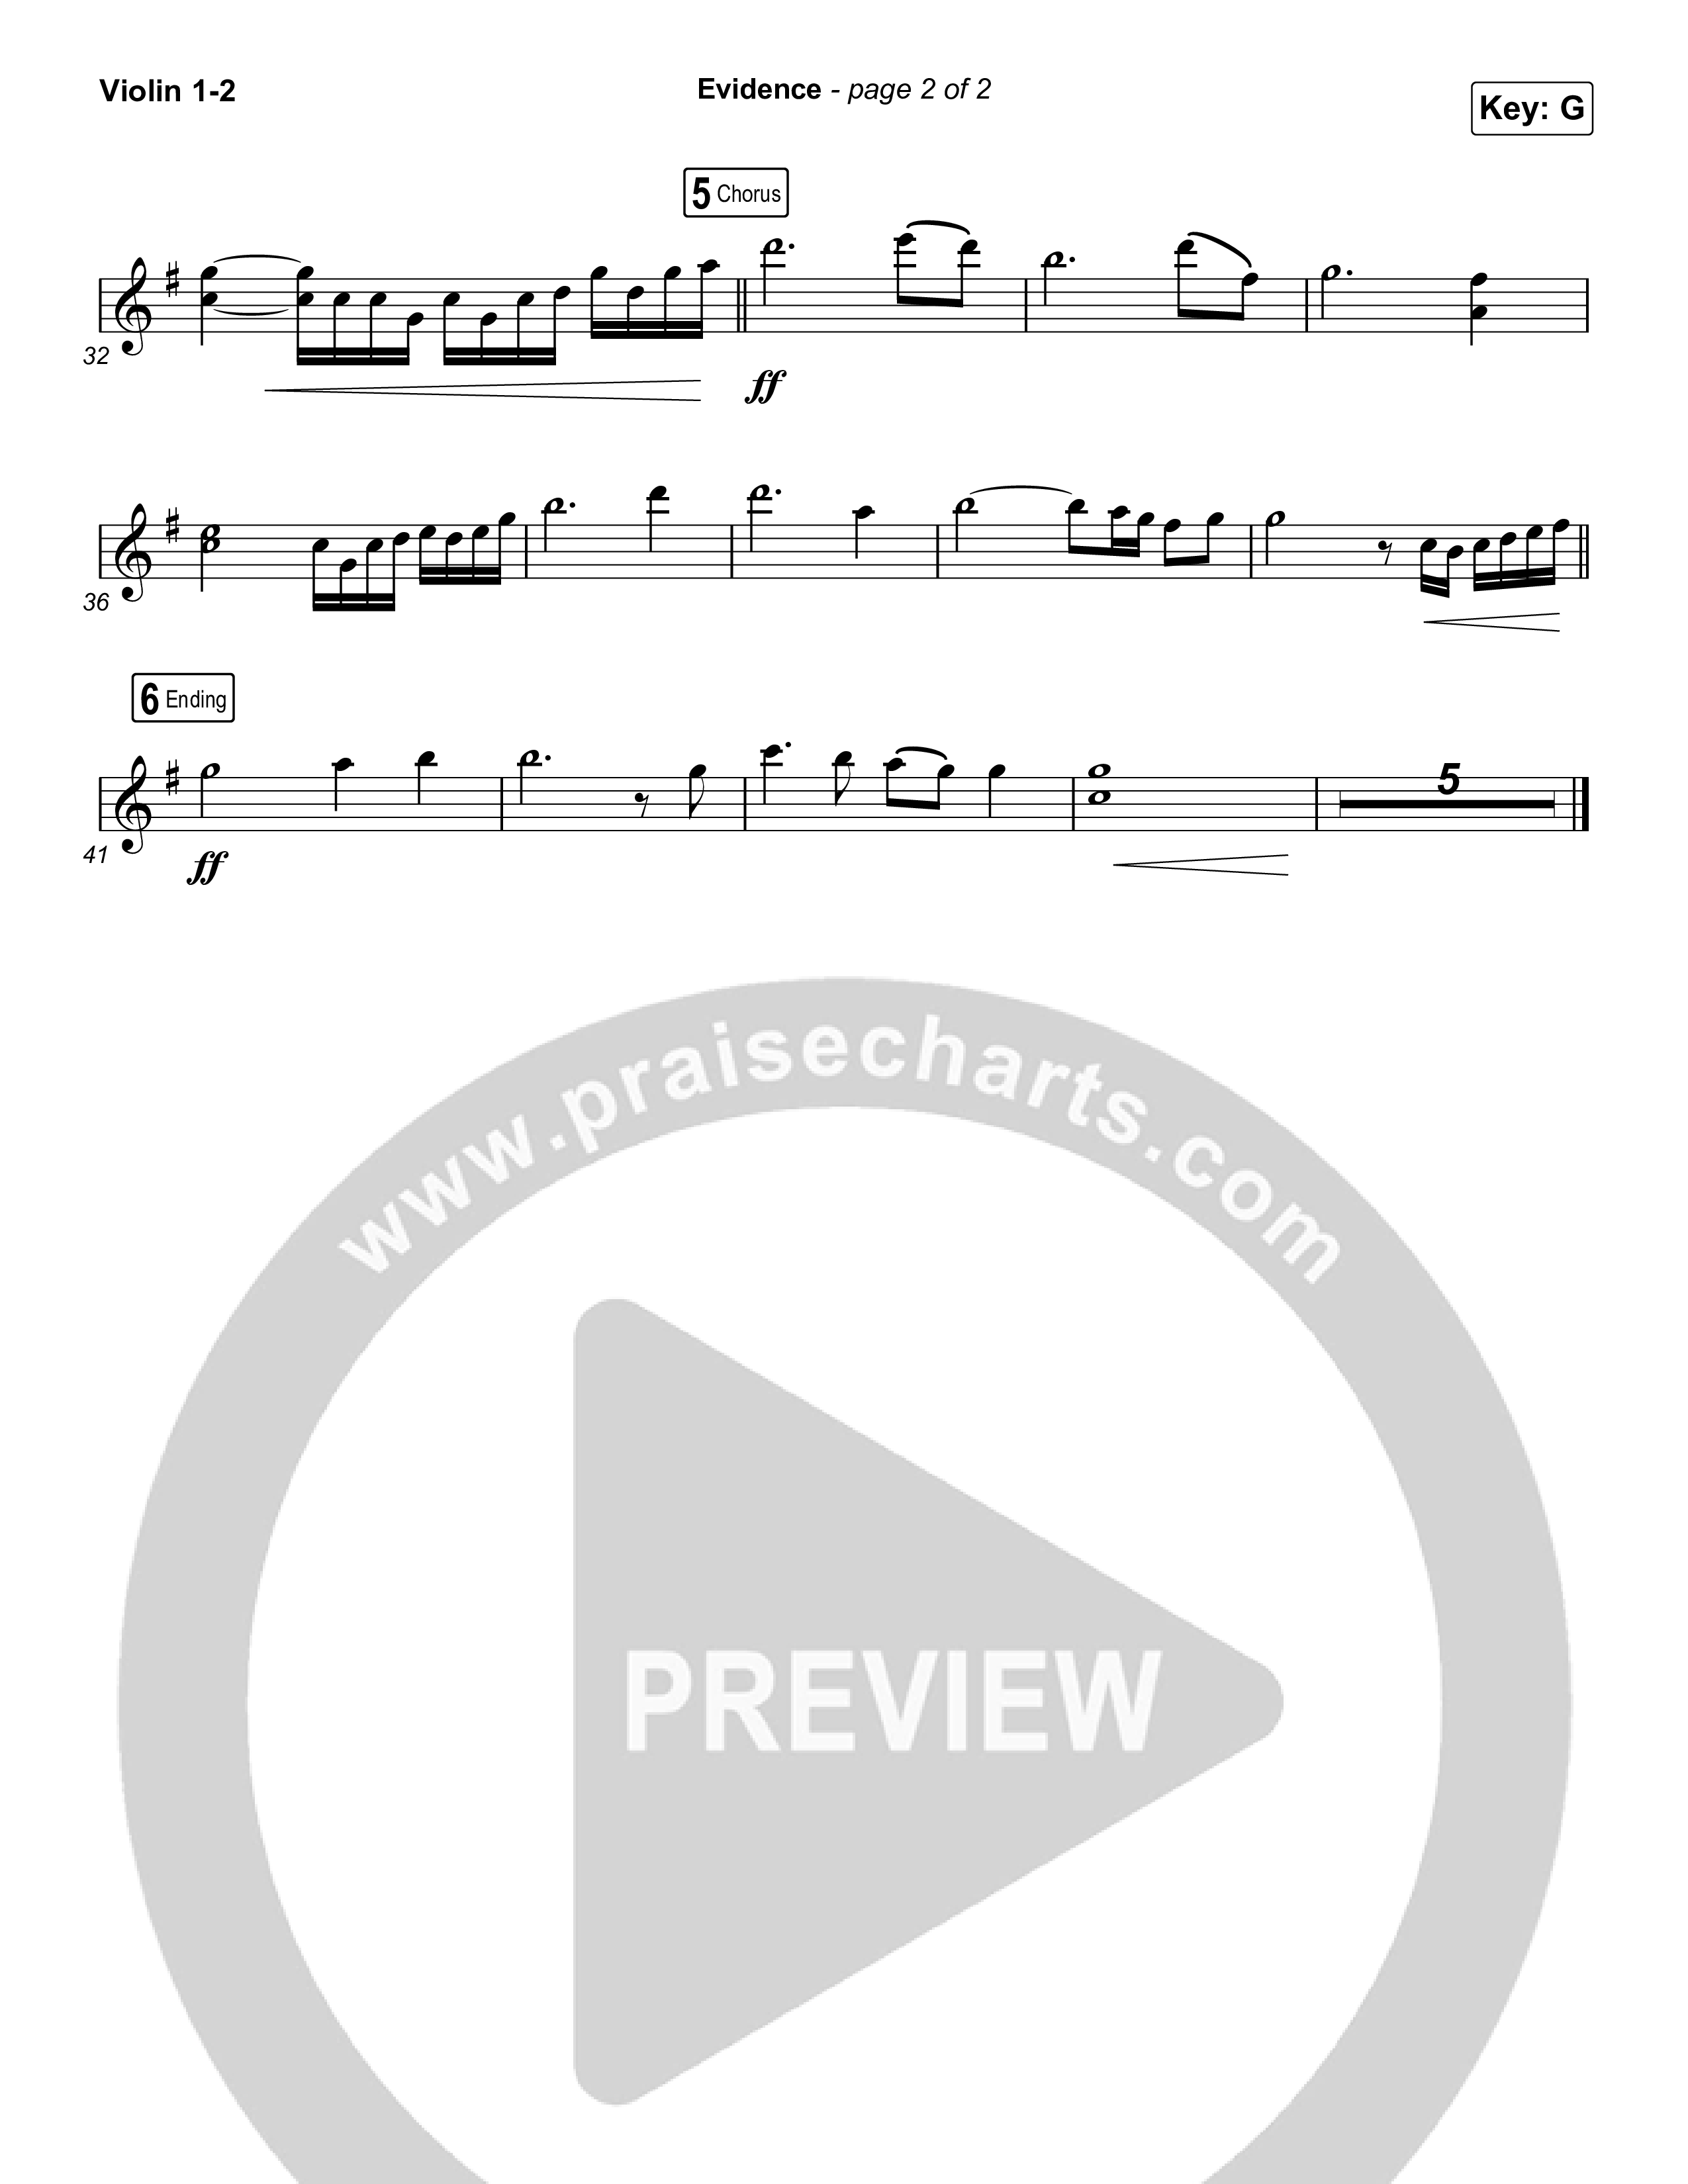 Evidence (Choral Anthem SATB) Violin 1/2 (Josh Baldwin / Arr. Luke Gambill)